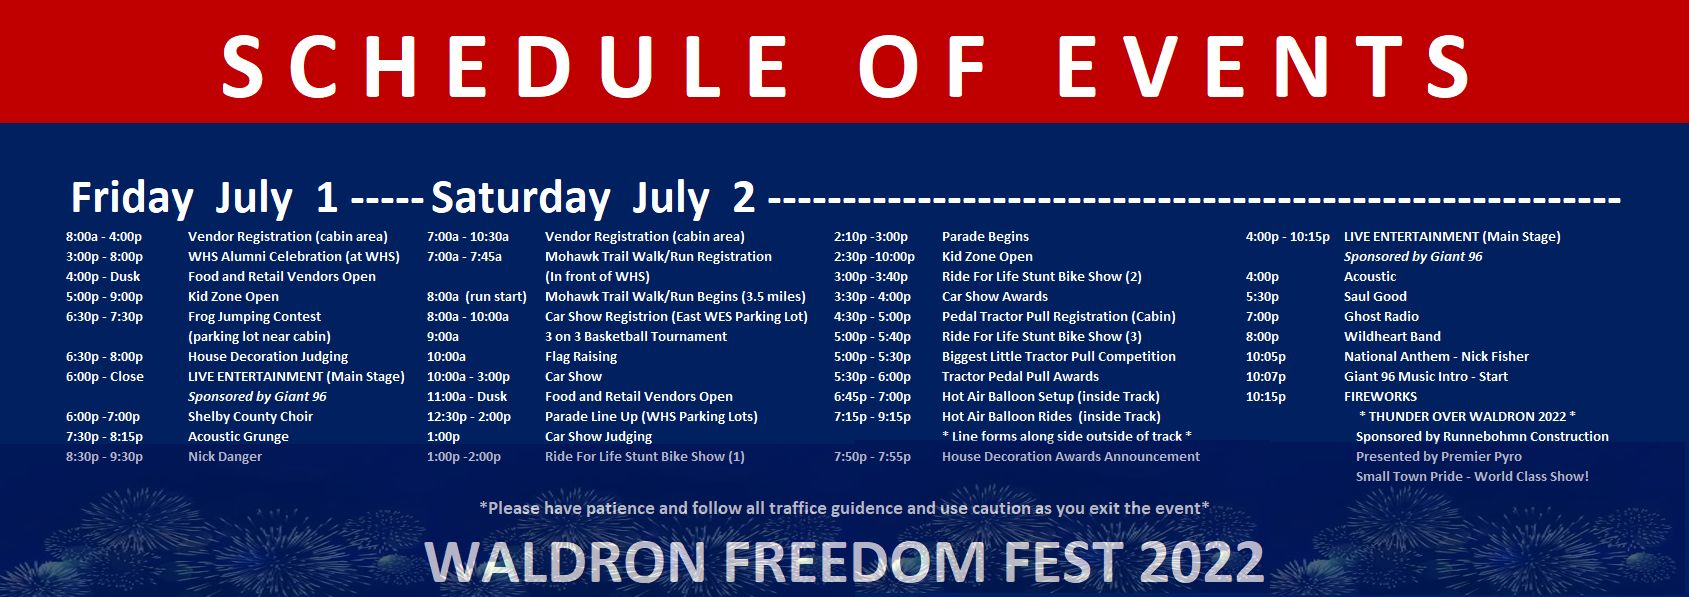 Waldron Freedom Fest Macaroni KID Shelbyville